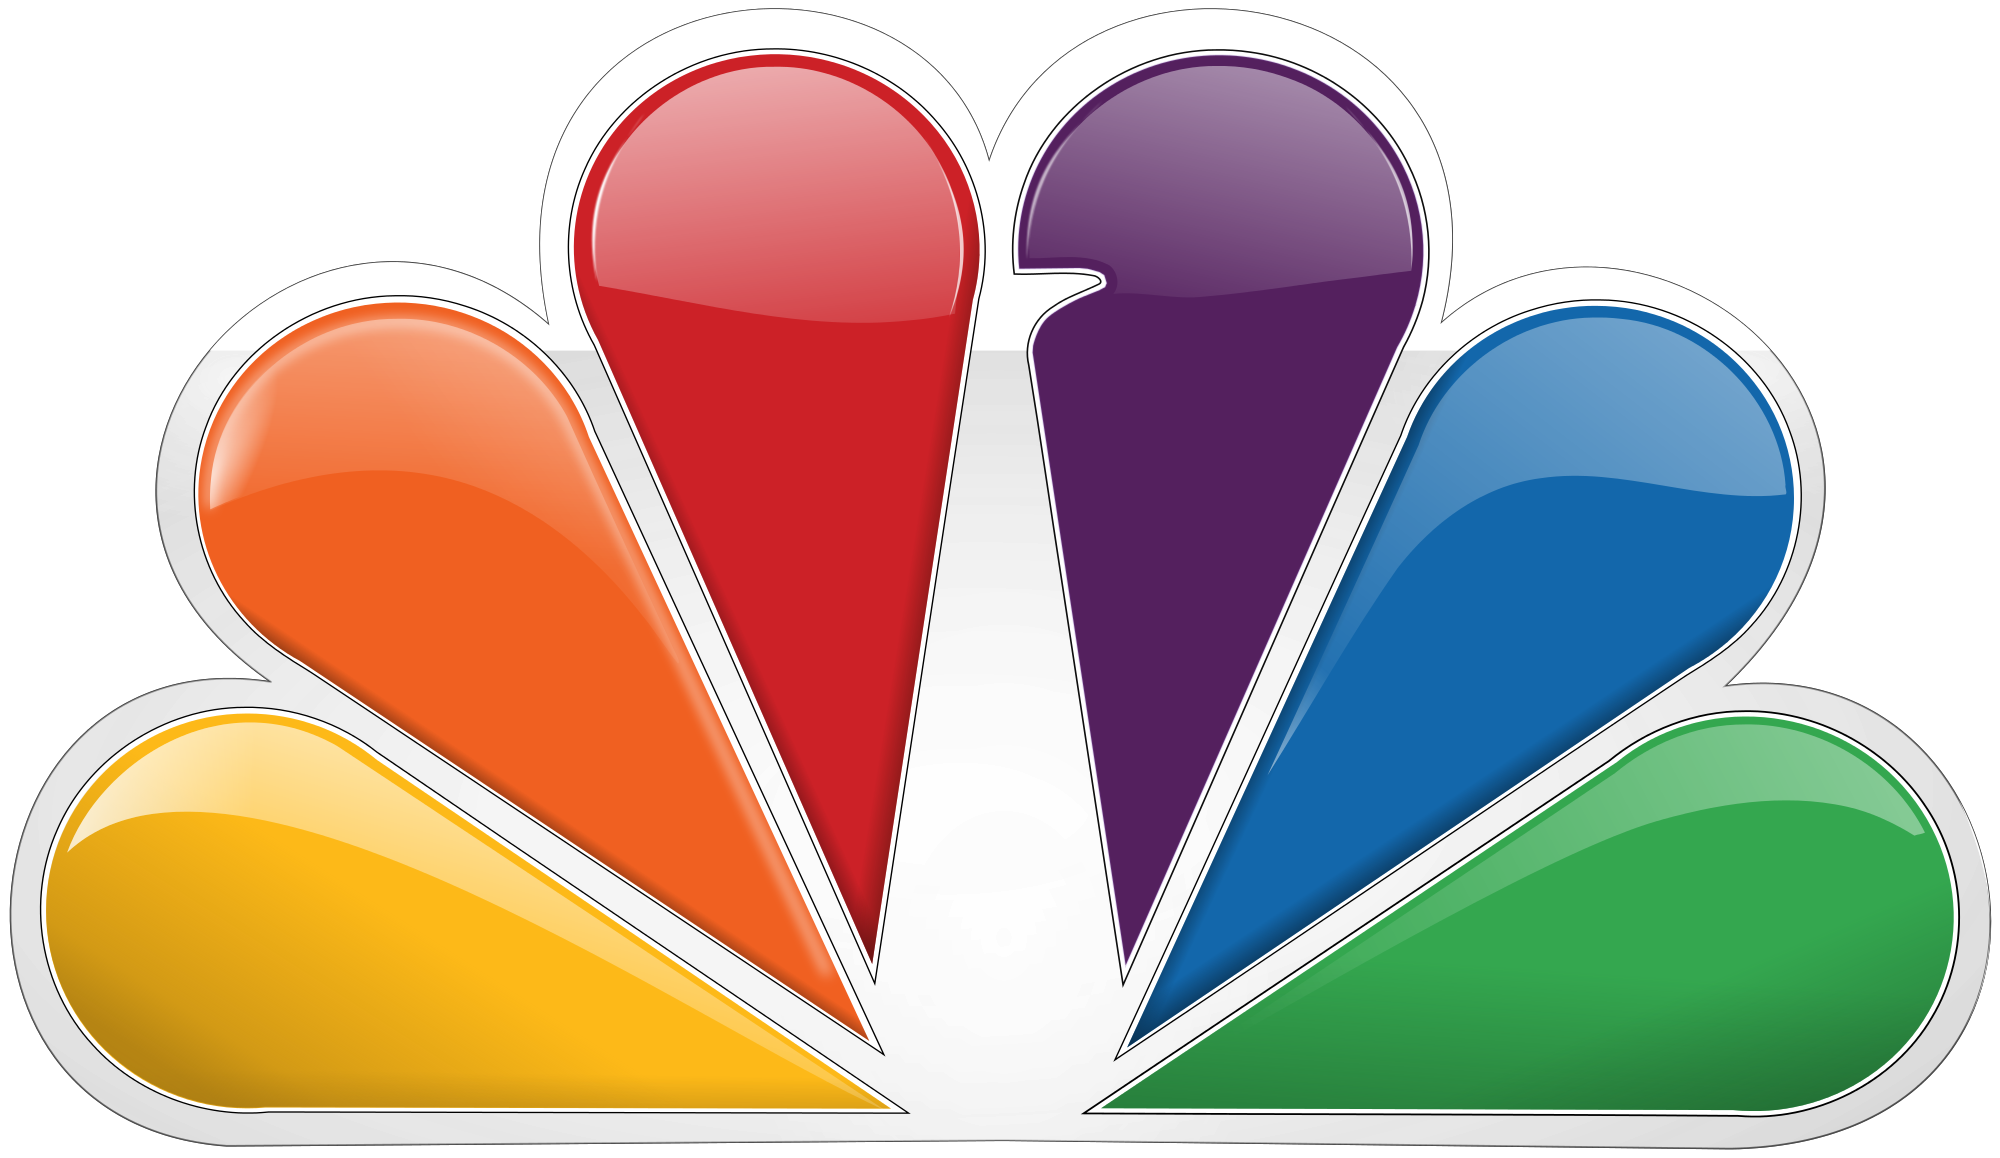 NBC_Peacock_logo_2013_svg.png